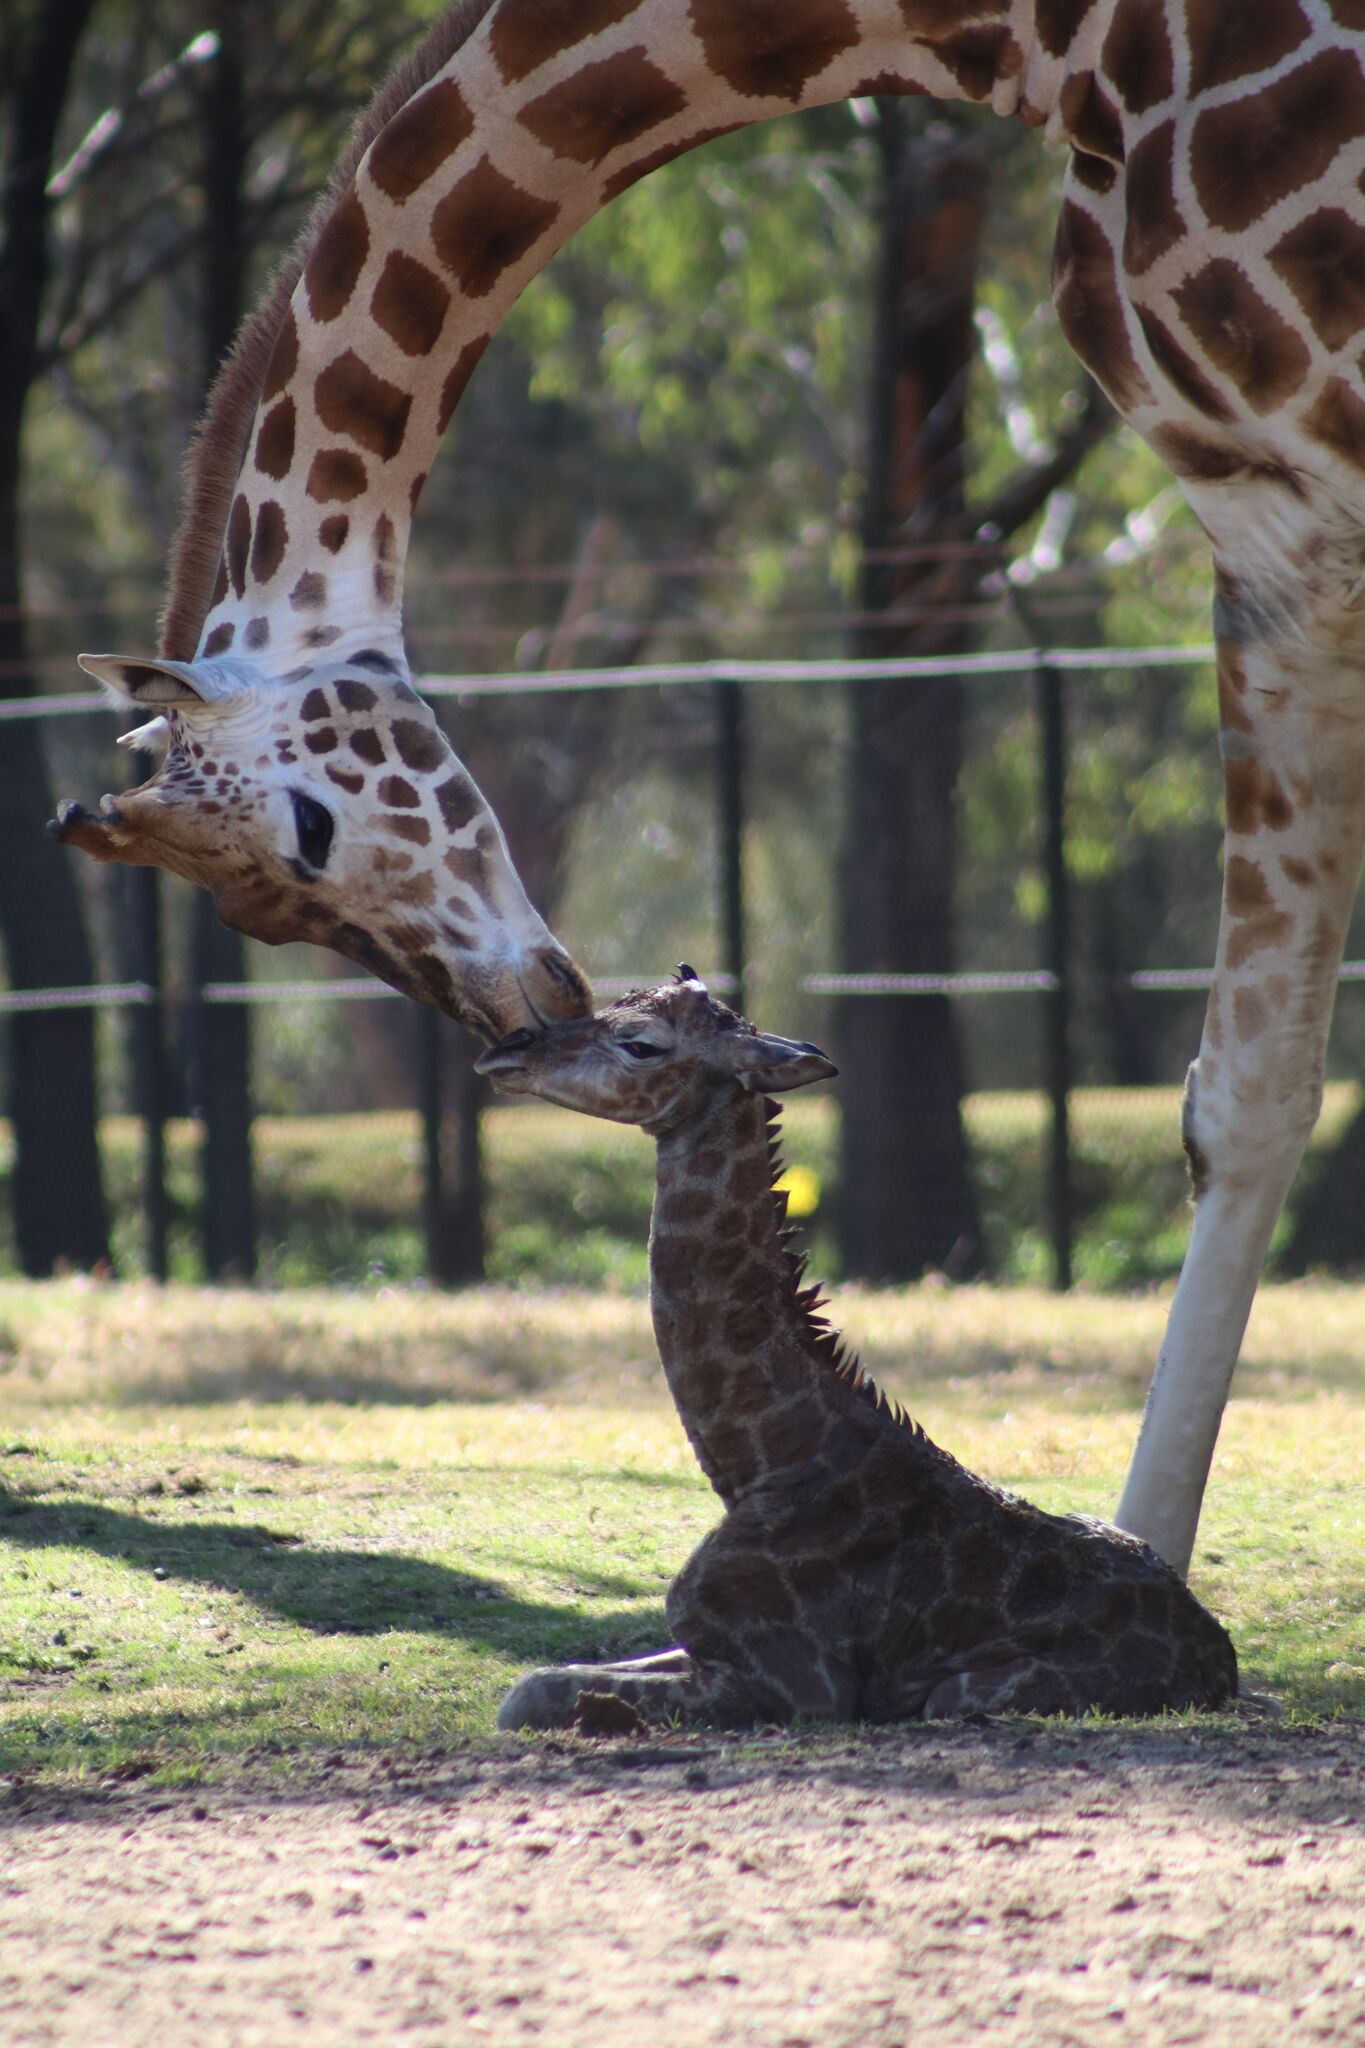 Giraffe calf and his mother at Taronga Western Plains Zoo